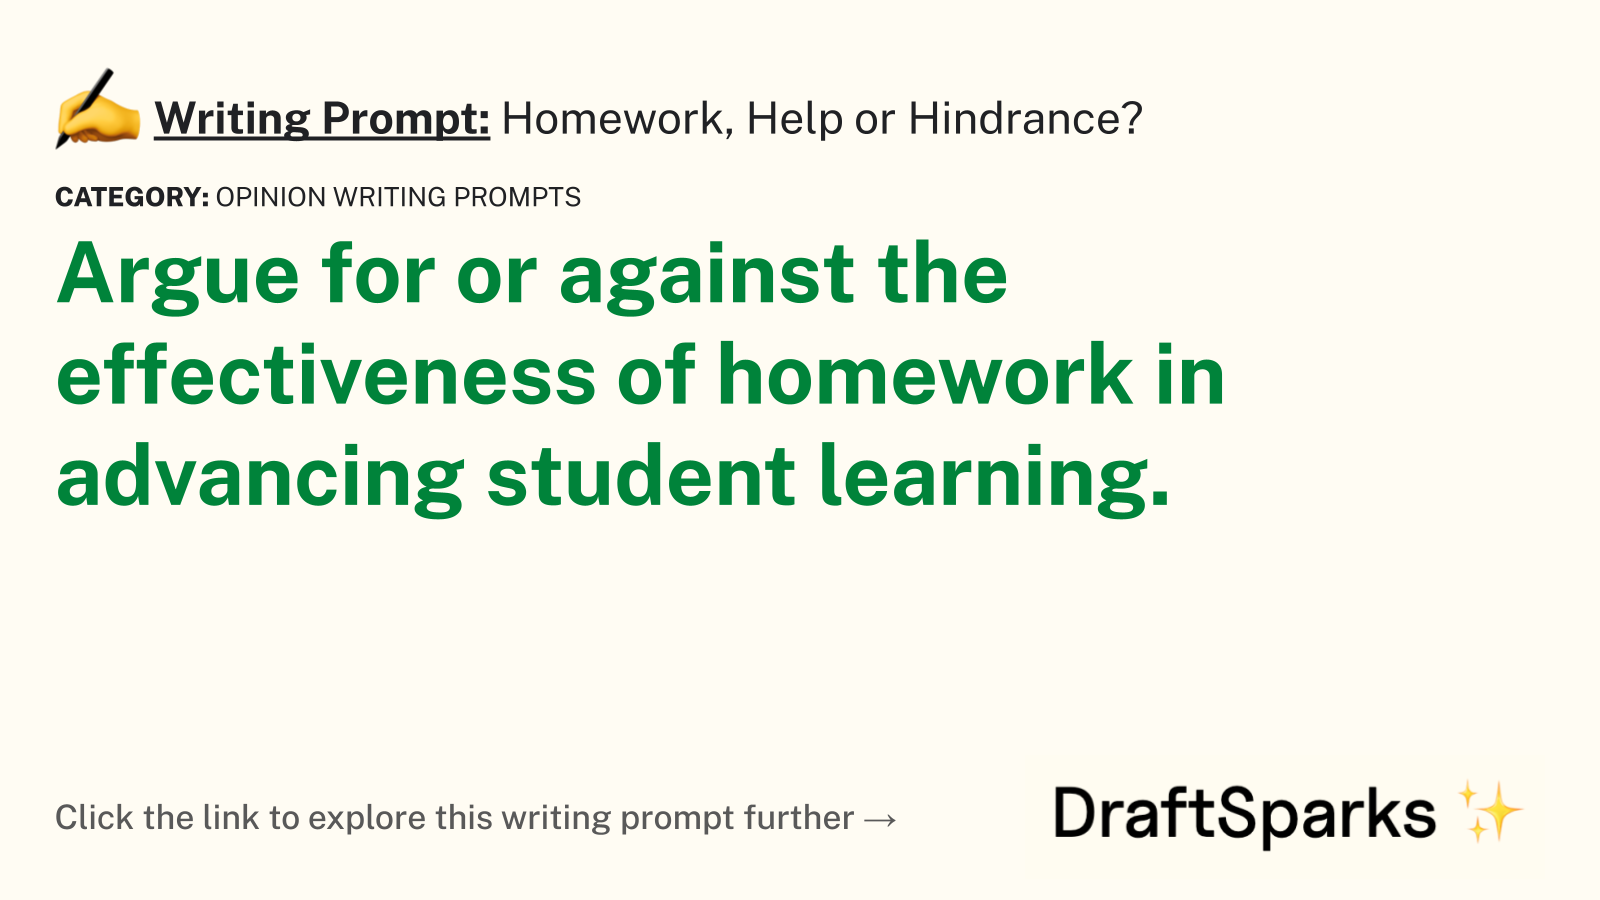 Homework, Help or Hindrance?